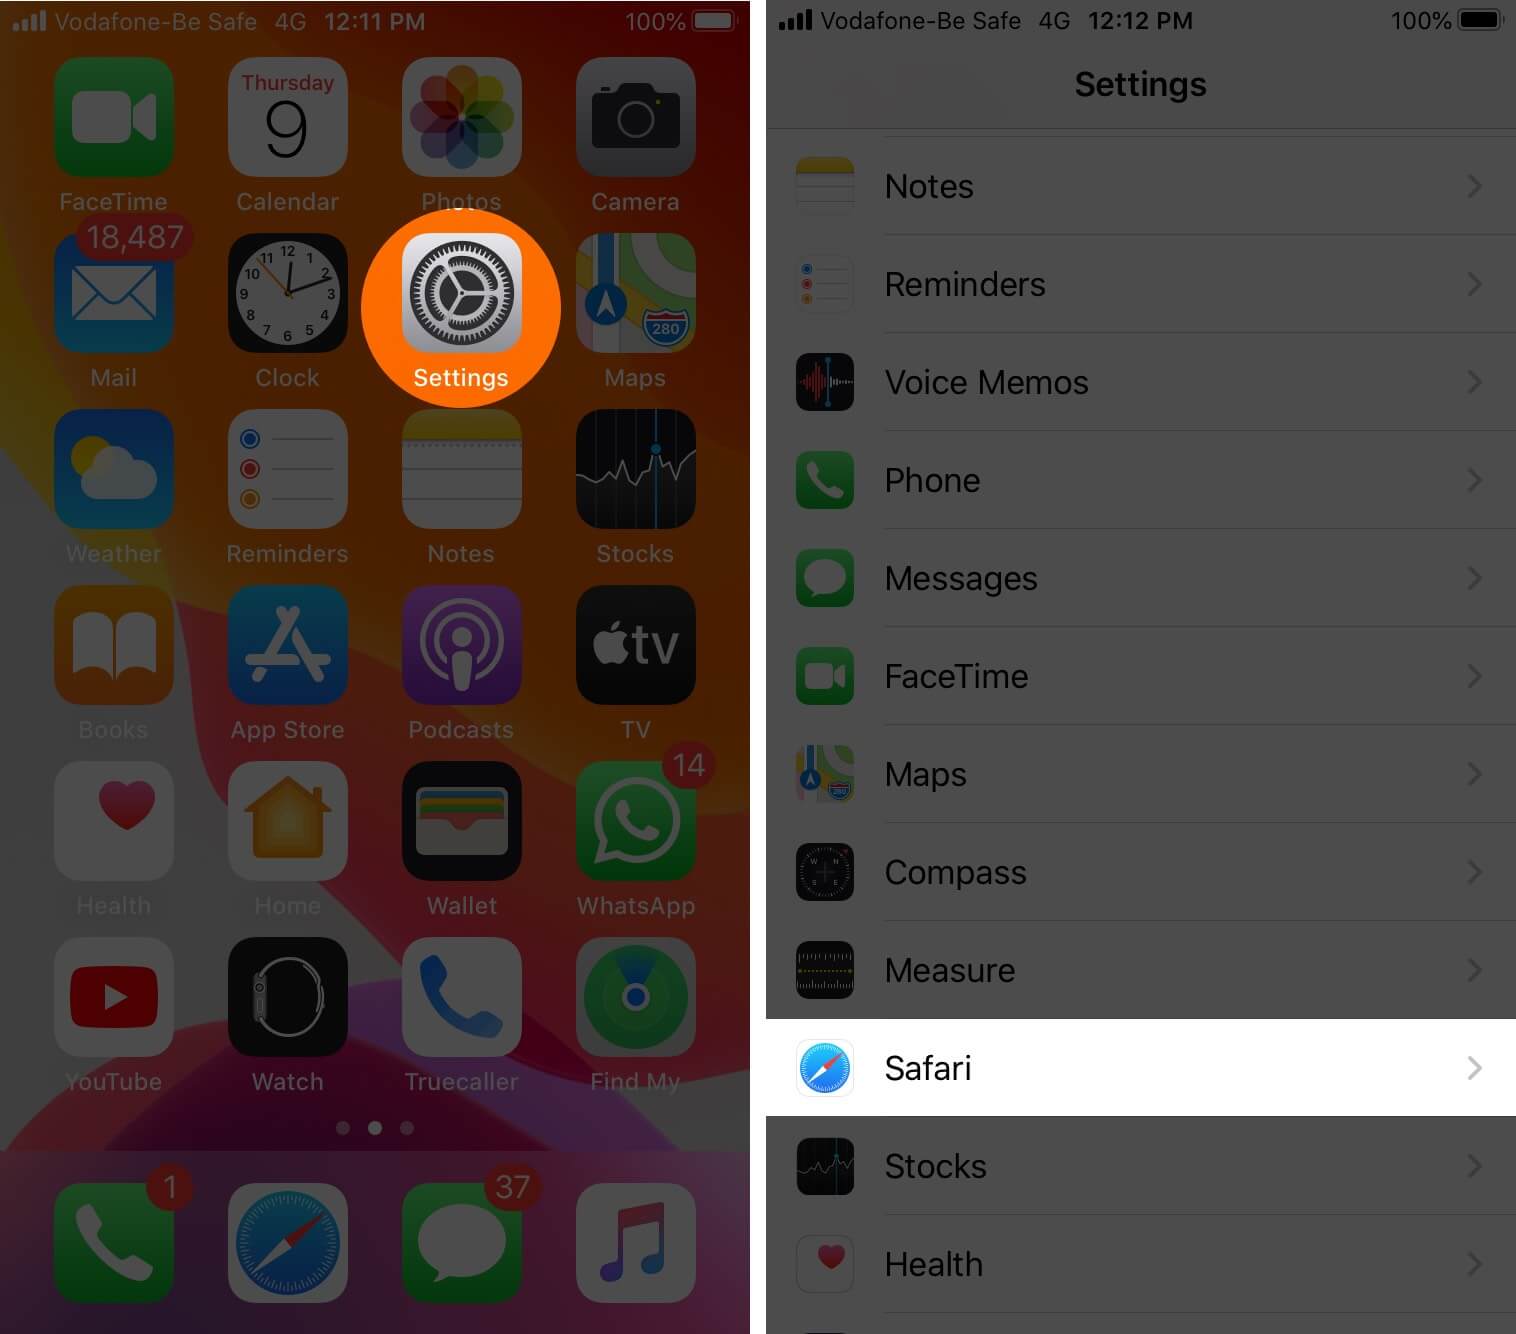 Open Settings and Tap on Safari on iPhone